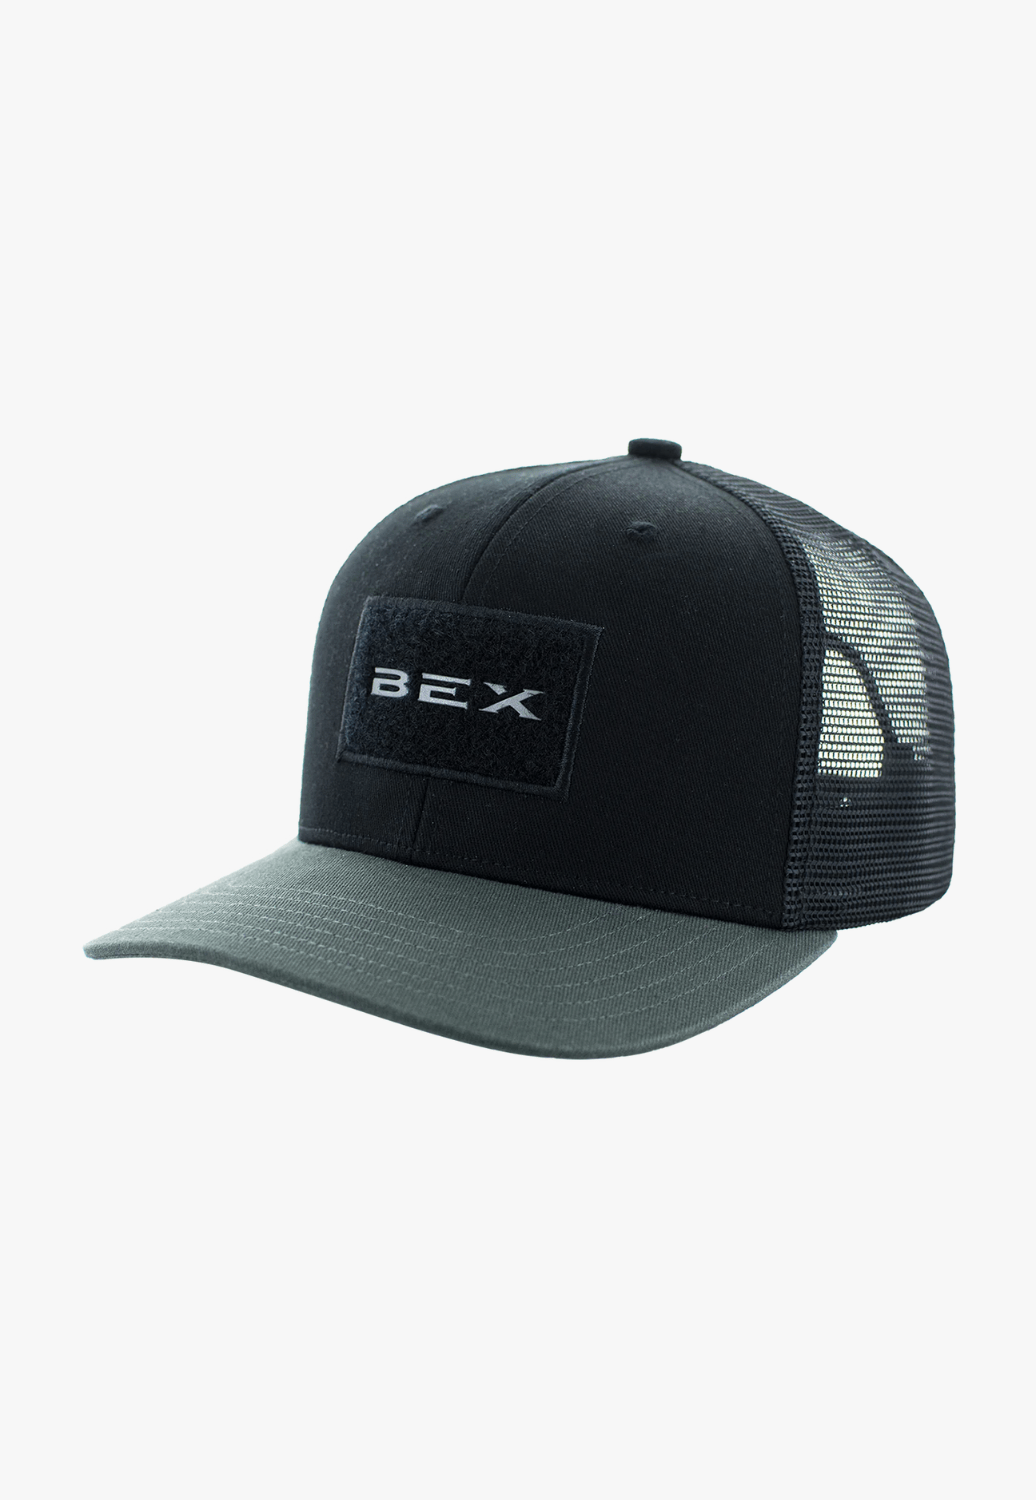 BEX HATS - Caps Black Bex Stickem Cap